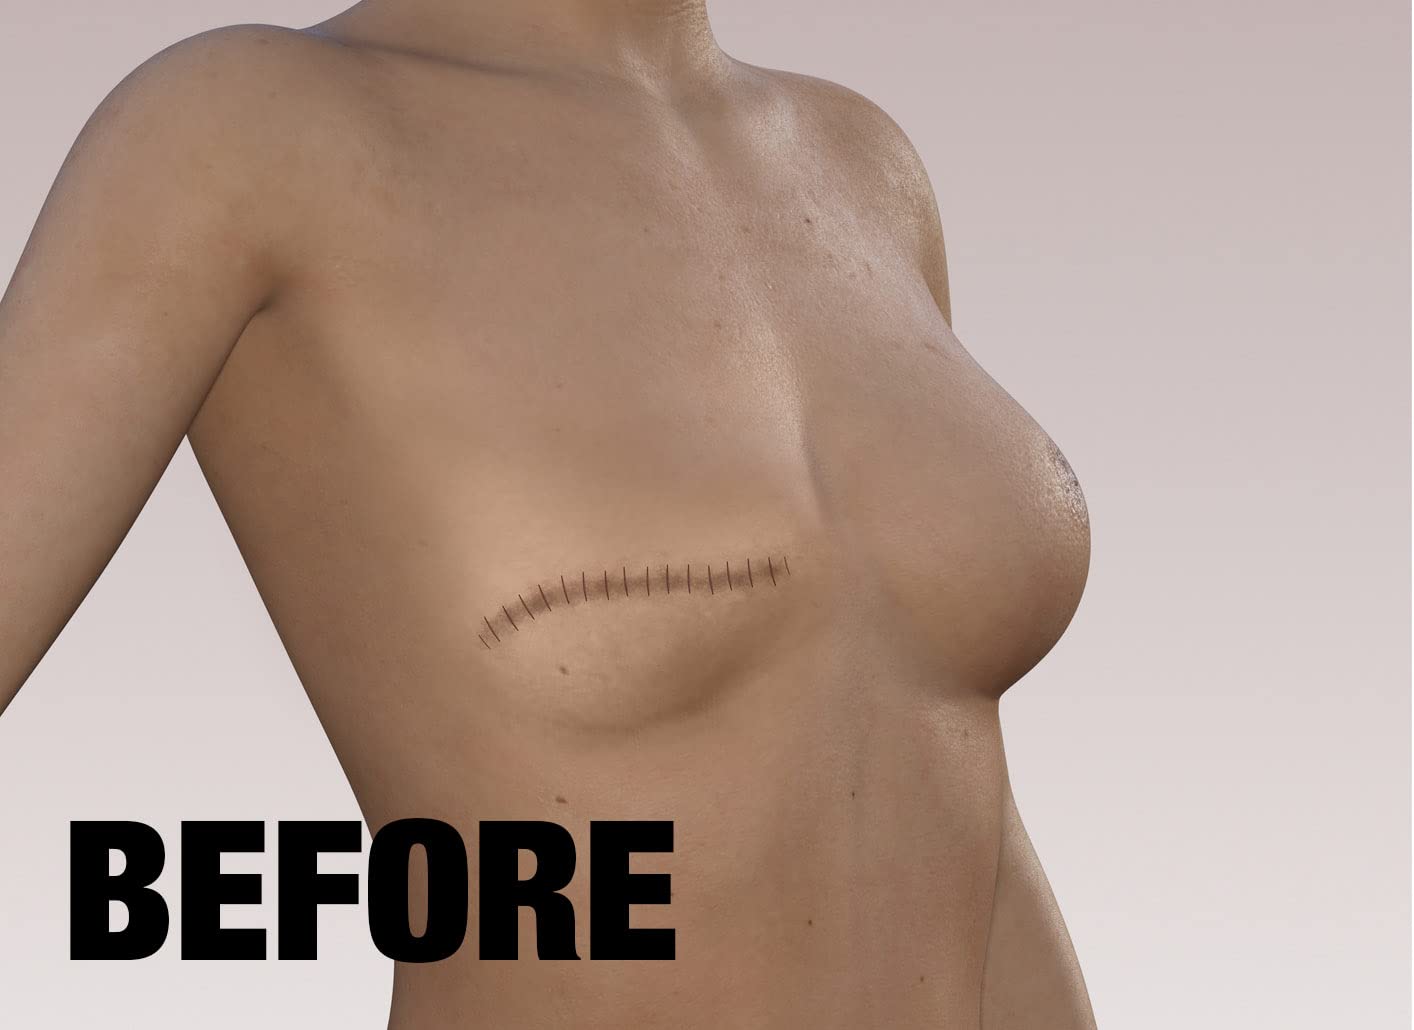 TuckTats Rose Vine Breast Temporary Tattoo (2)